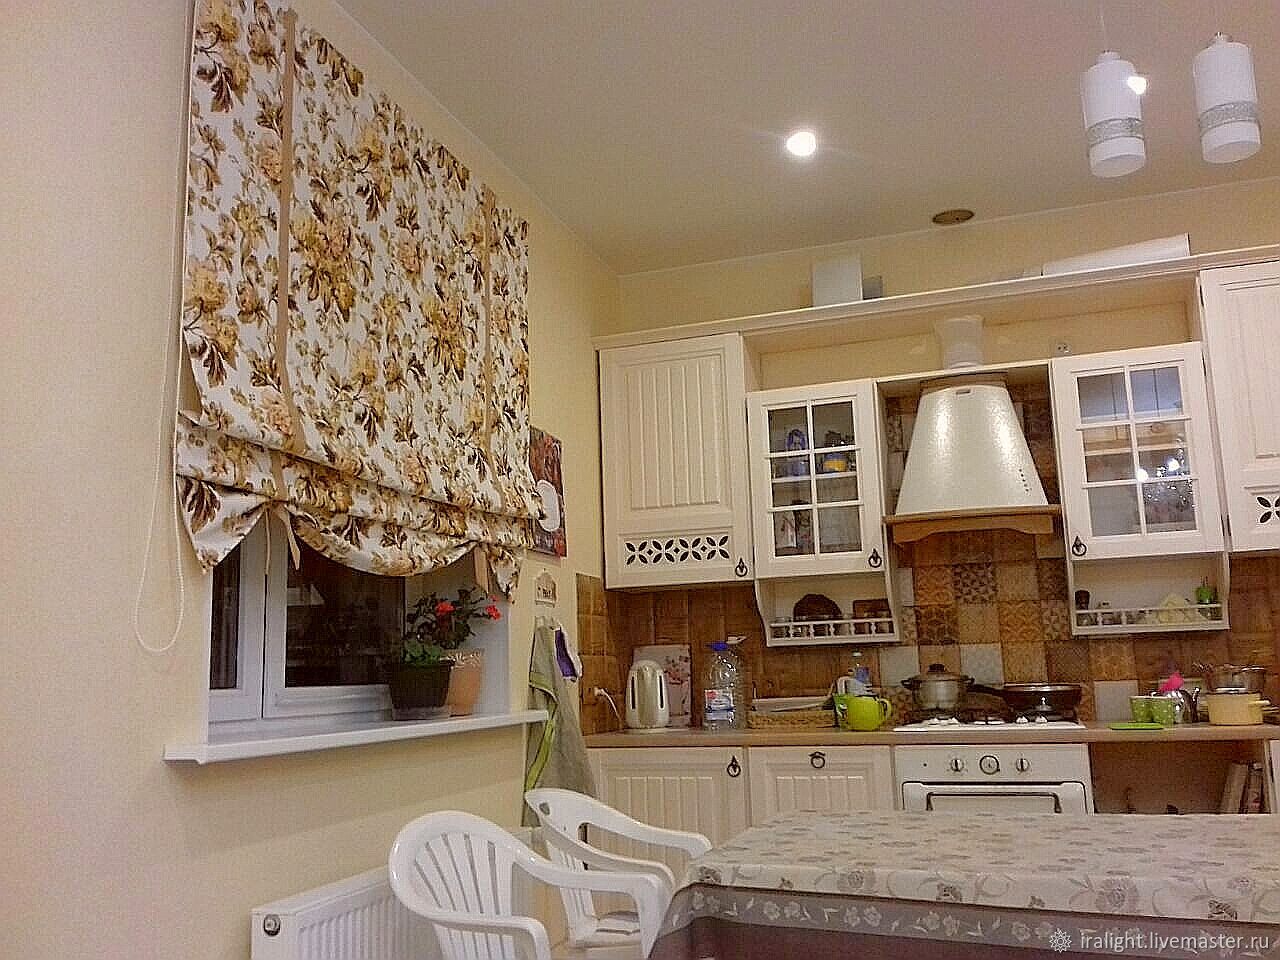 Занавески для кухни фото в интерьере кухни